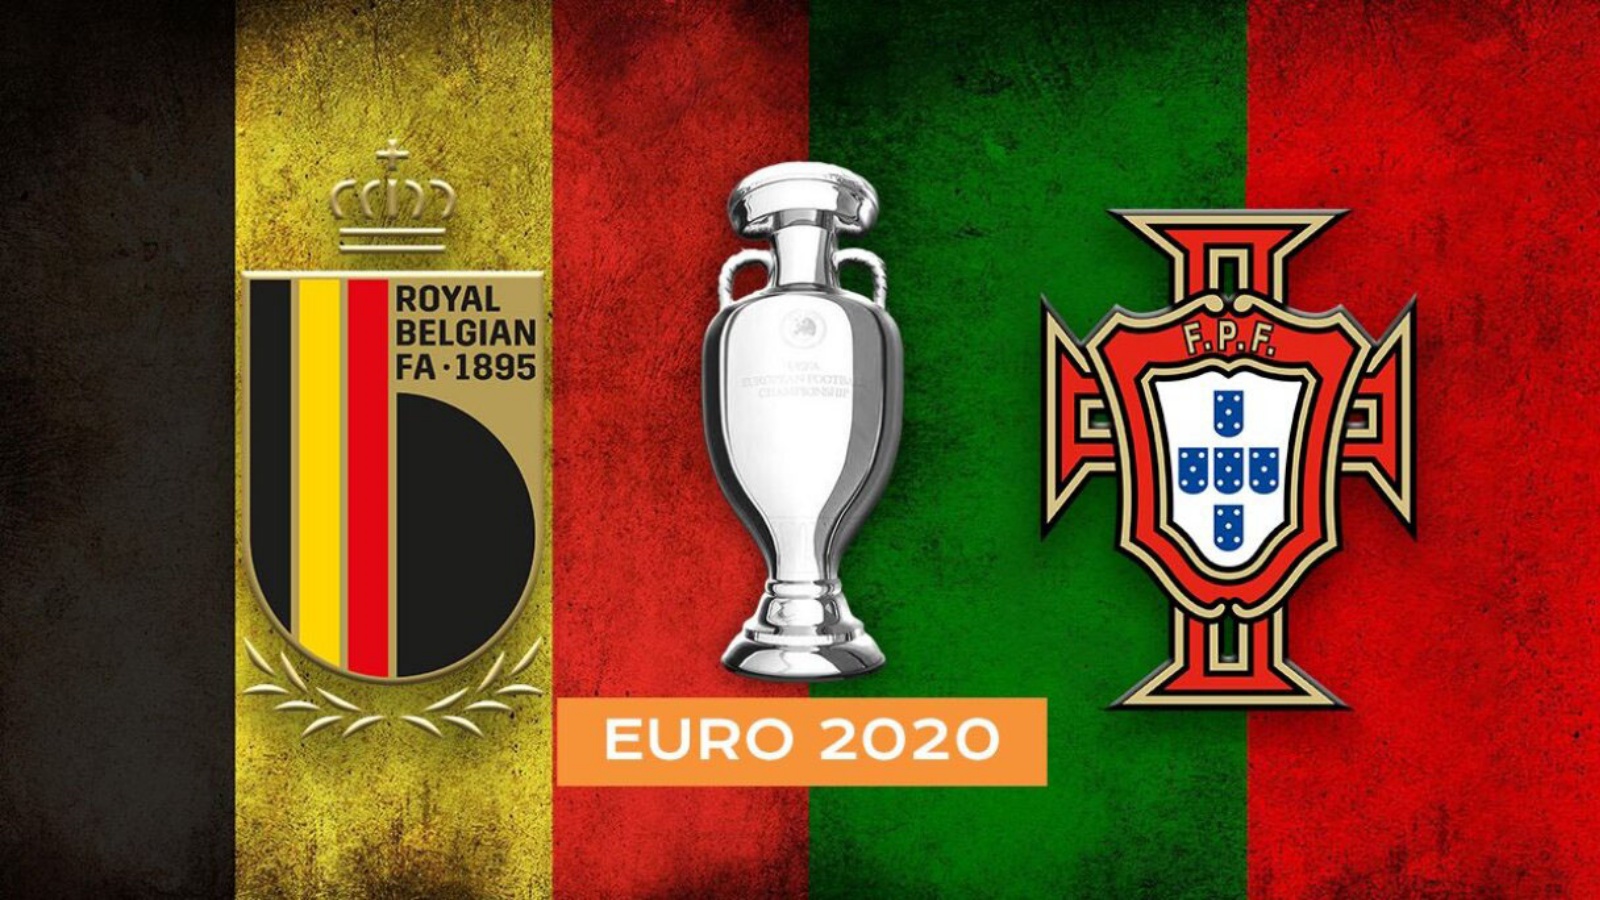 BÉLGICA - PORTUGAL PRO TV EN VIVO EURO 2020